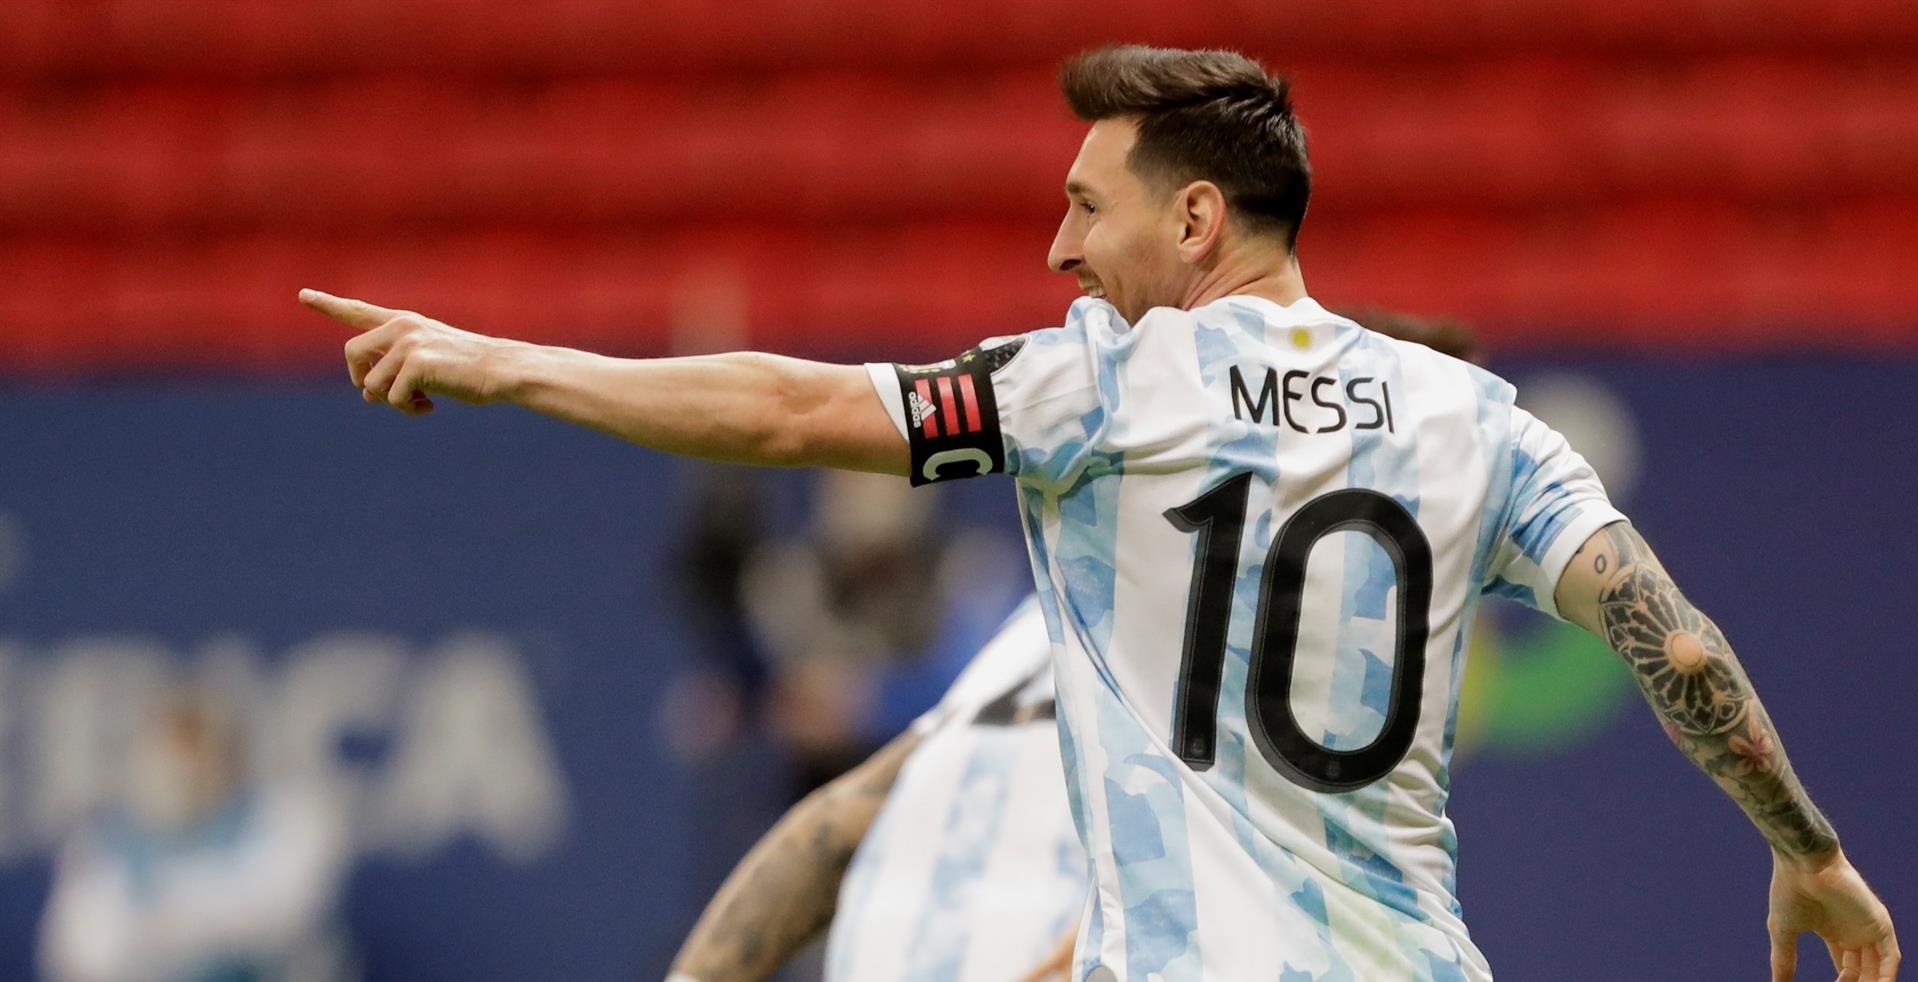 Roundup 7 Agustus: Jerinx Jadi Tersangka hingga Kabar Messi ke PSG